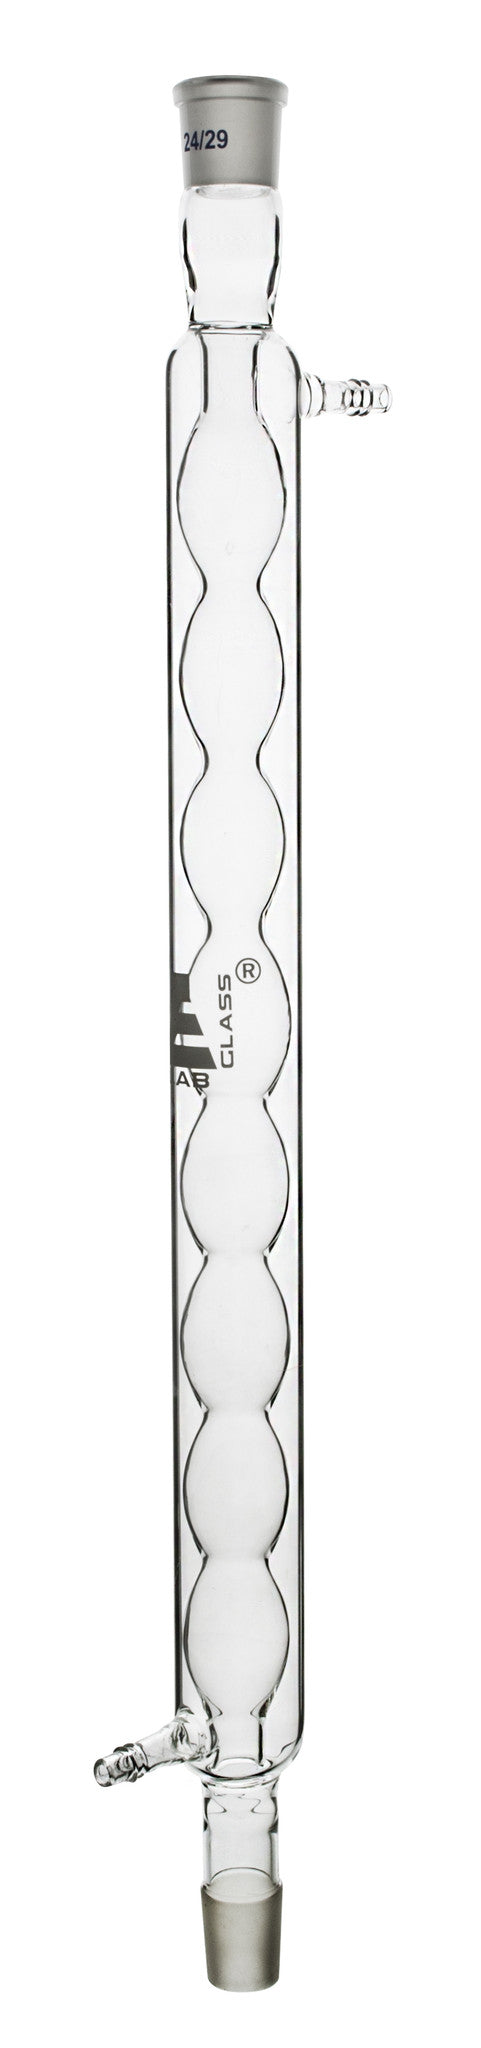 Condenser - Allihn Bulb, Socket size 24/29 & Cone size 24/29, effective length 25mm